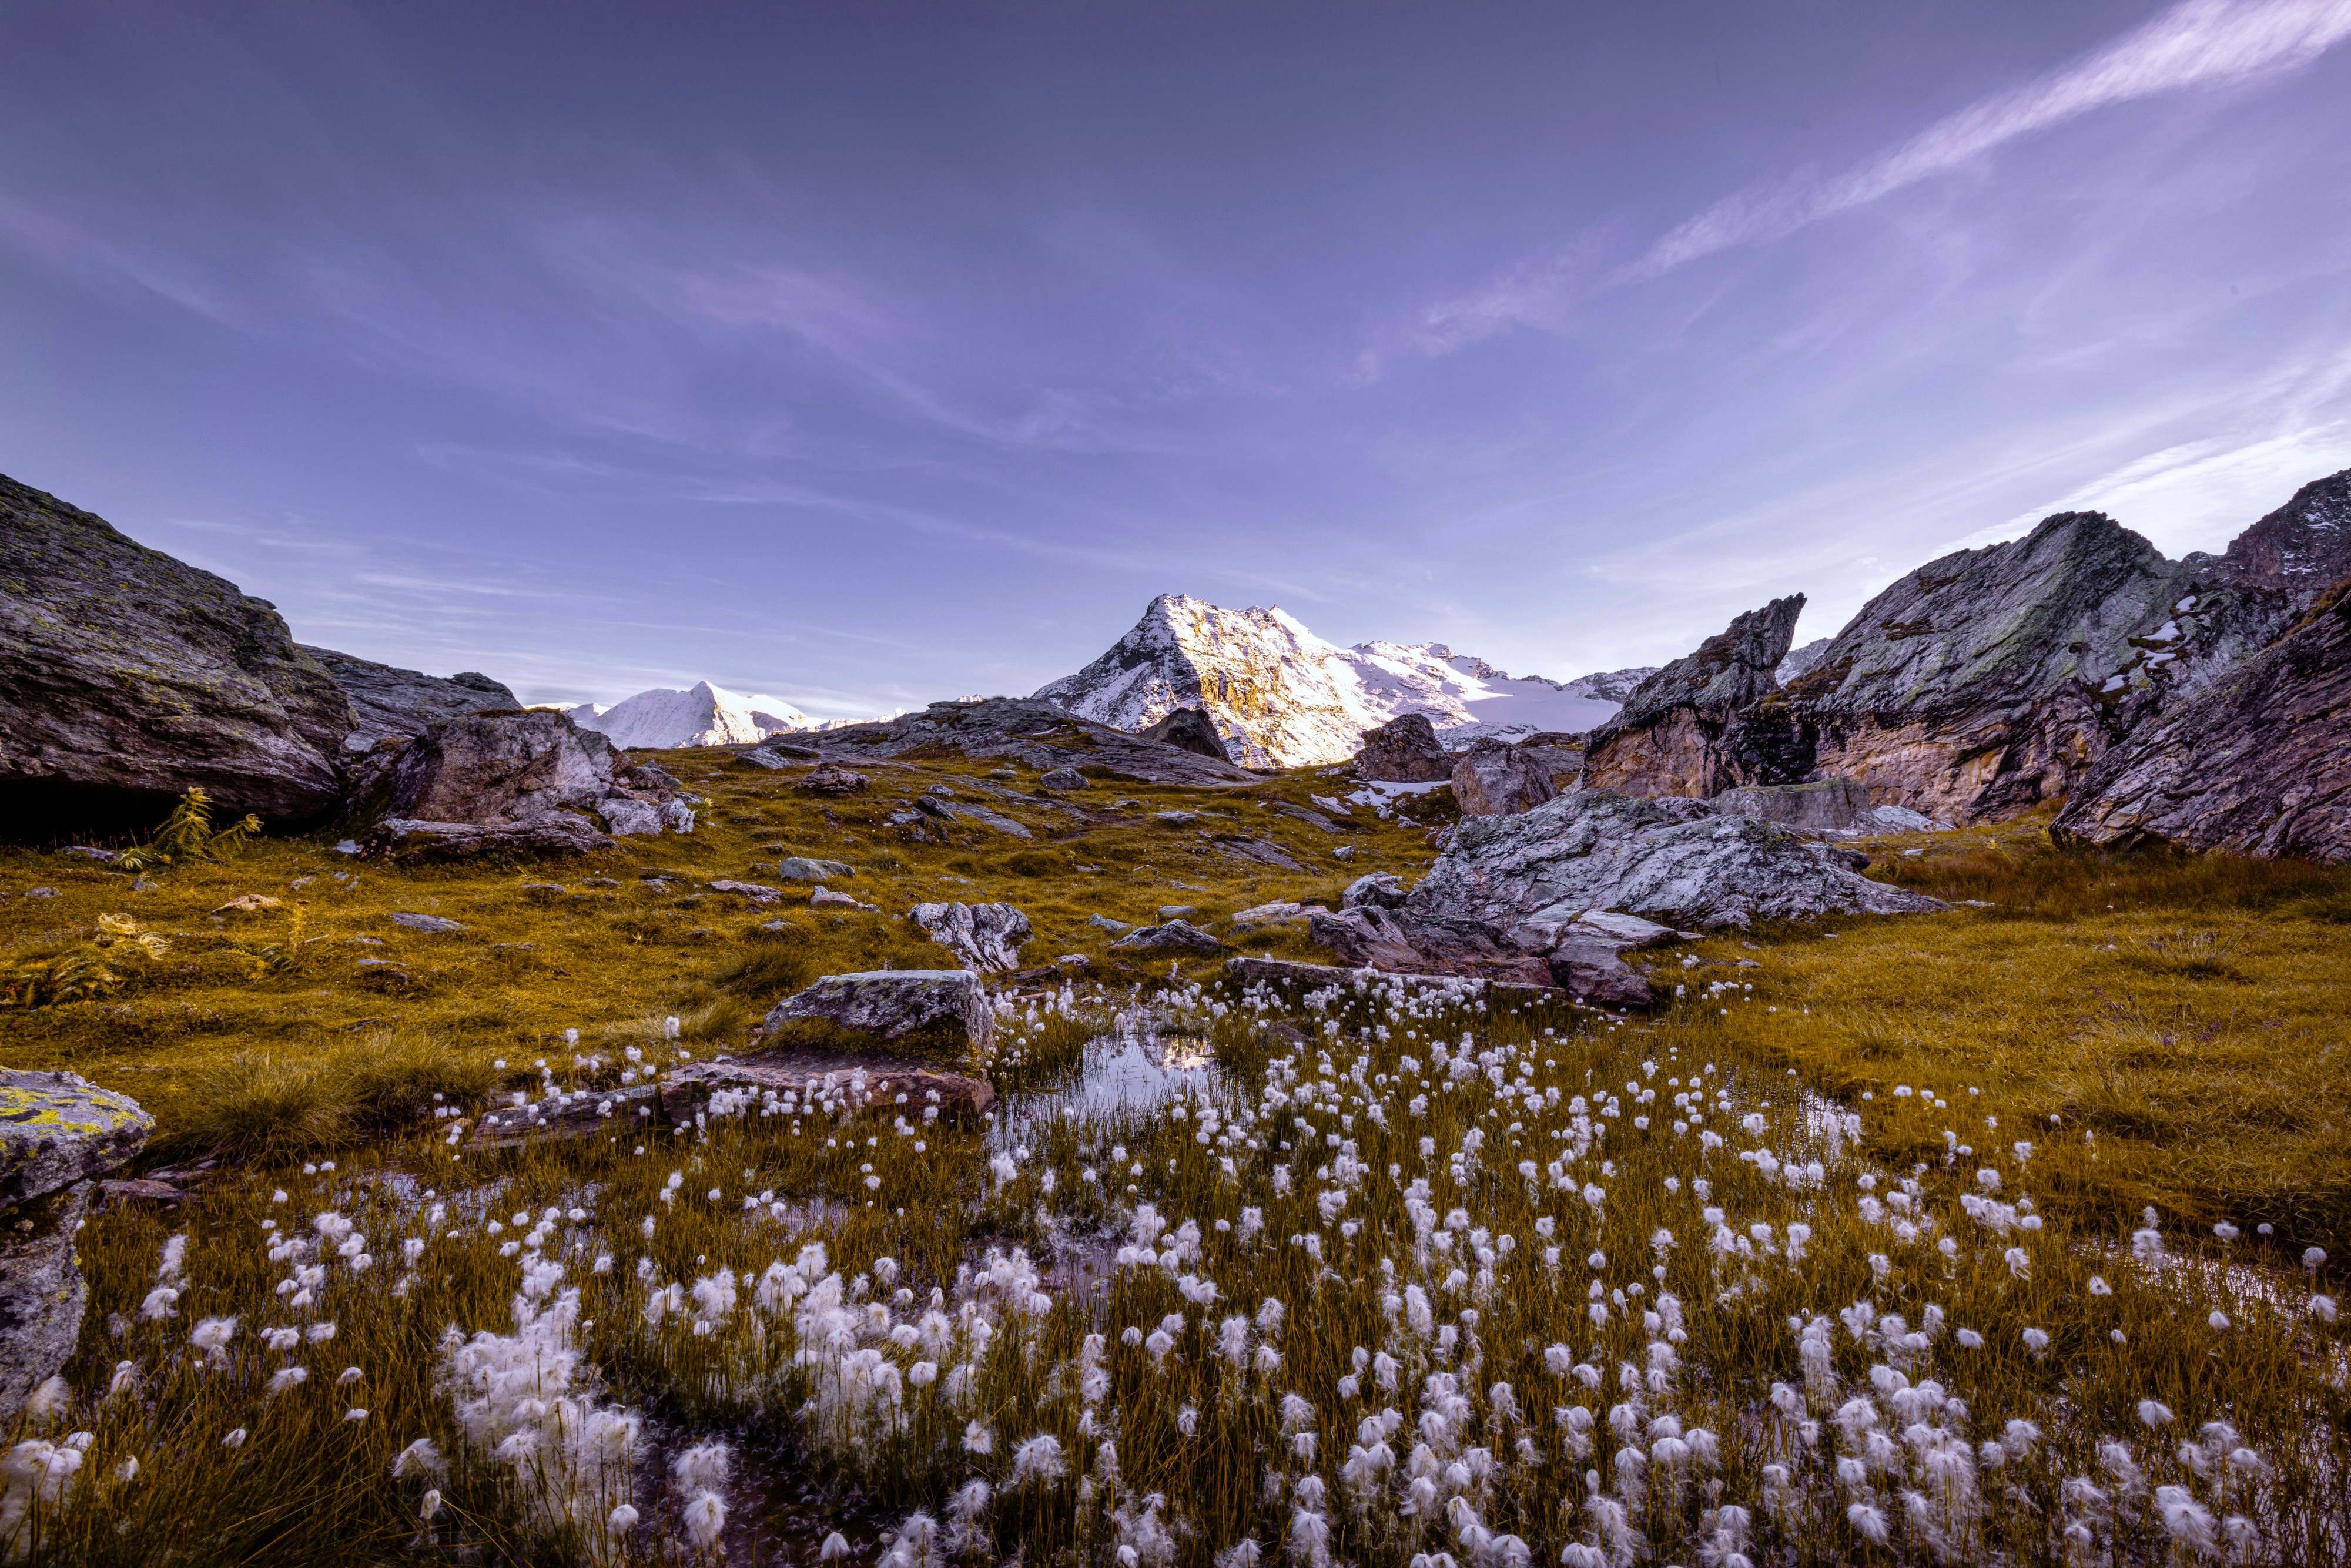 General 4000x2668 nature landscape plants grass mountains sky clouds rocks snow Cottongrass Swiss Alps Switzerland